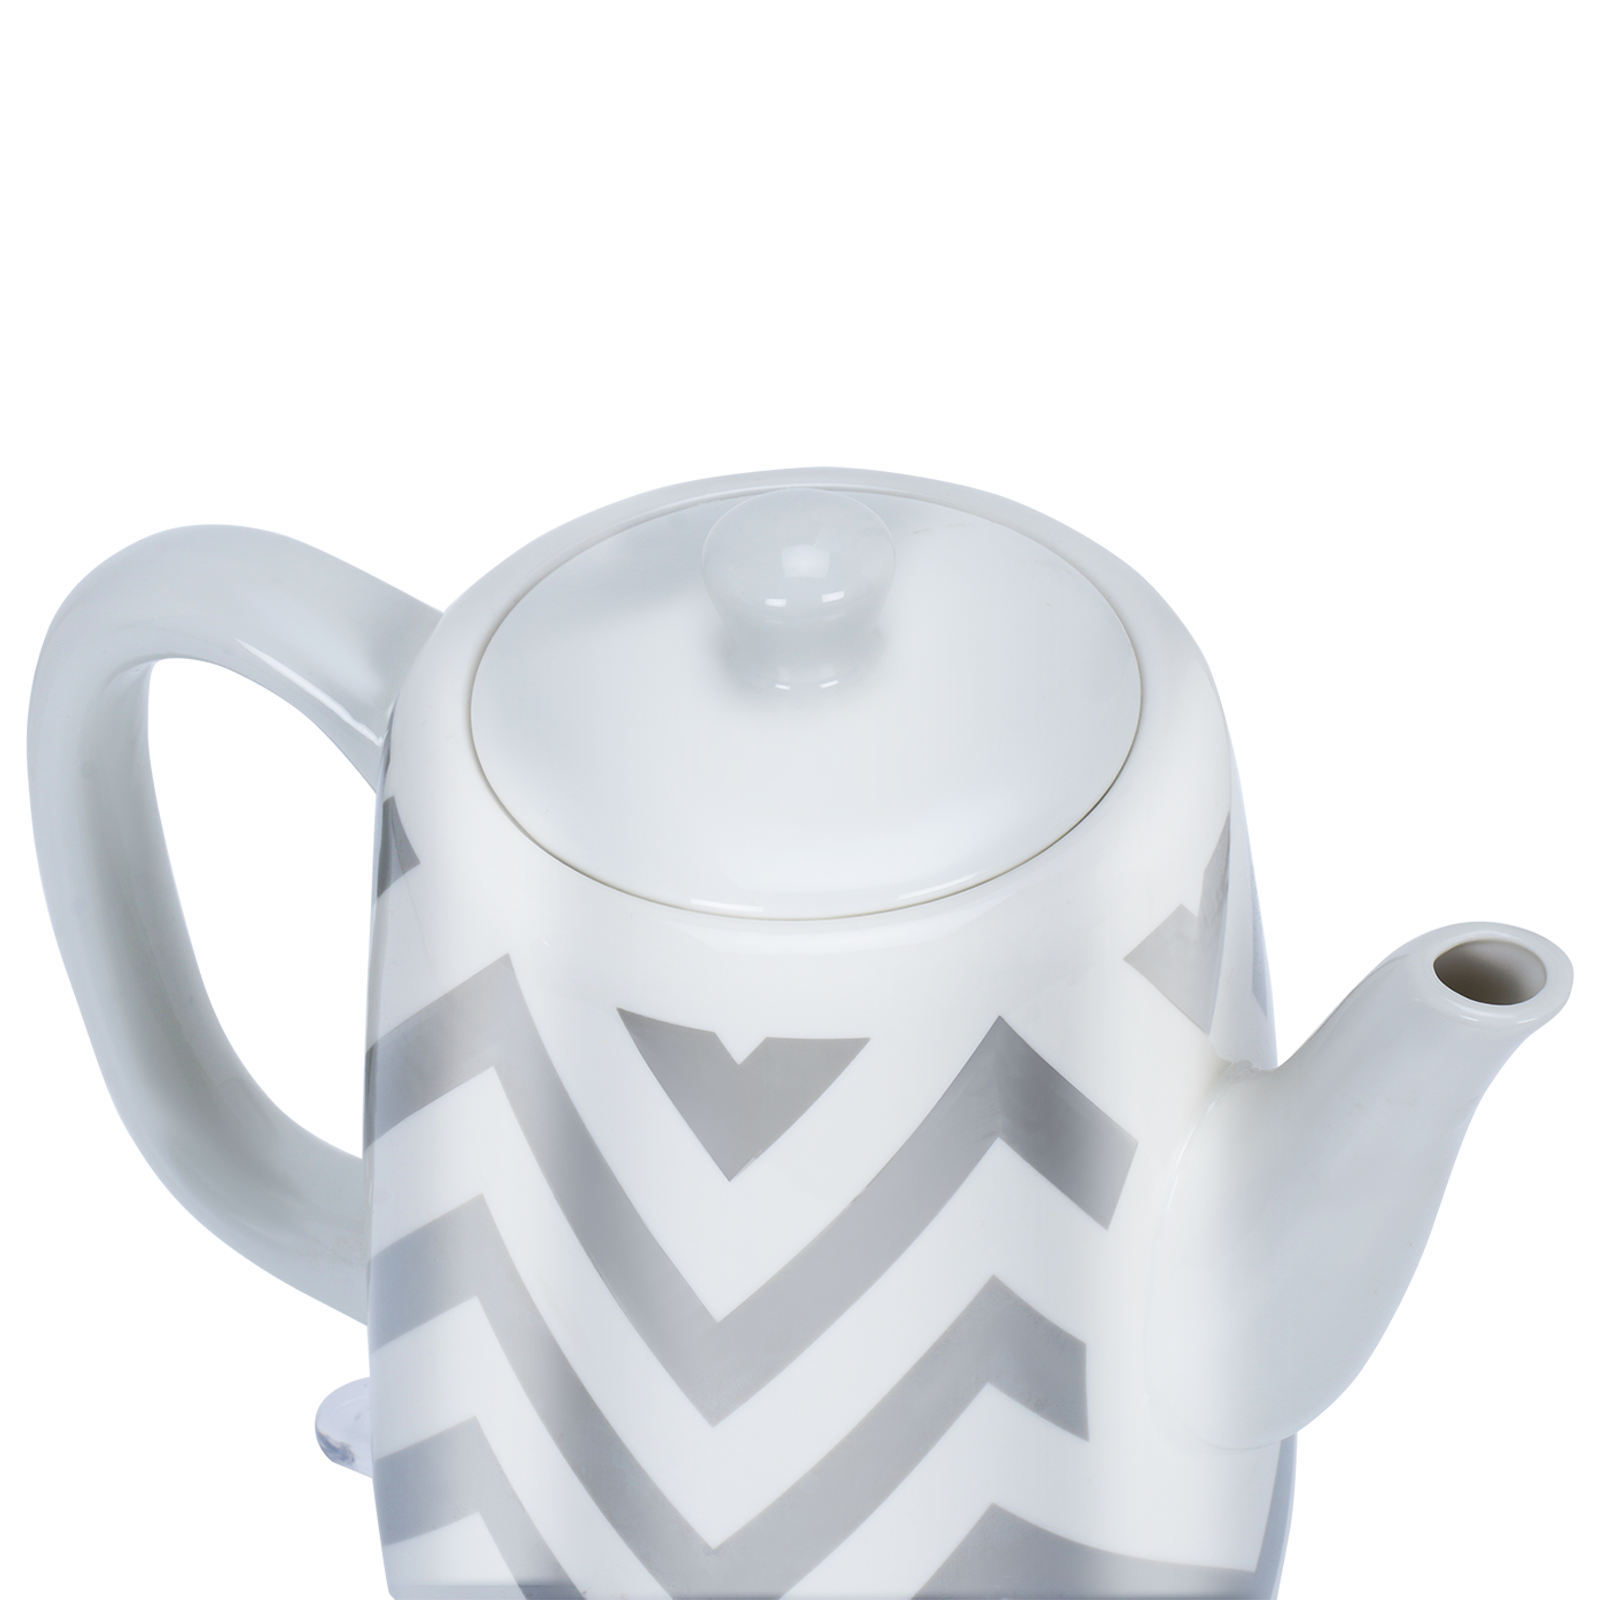 BELLA 1.8 Liter Electric Ceramic Tea Kettle with Detachable Base & Boil Dry  Protection, Silver Chevron